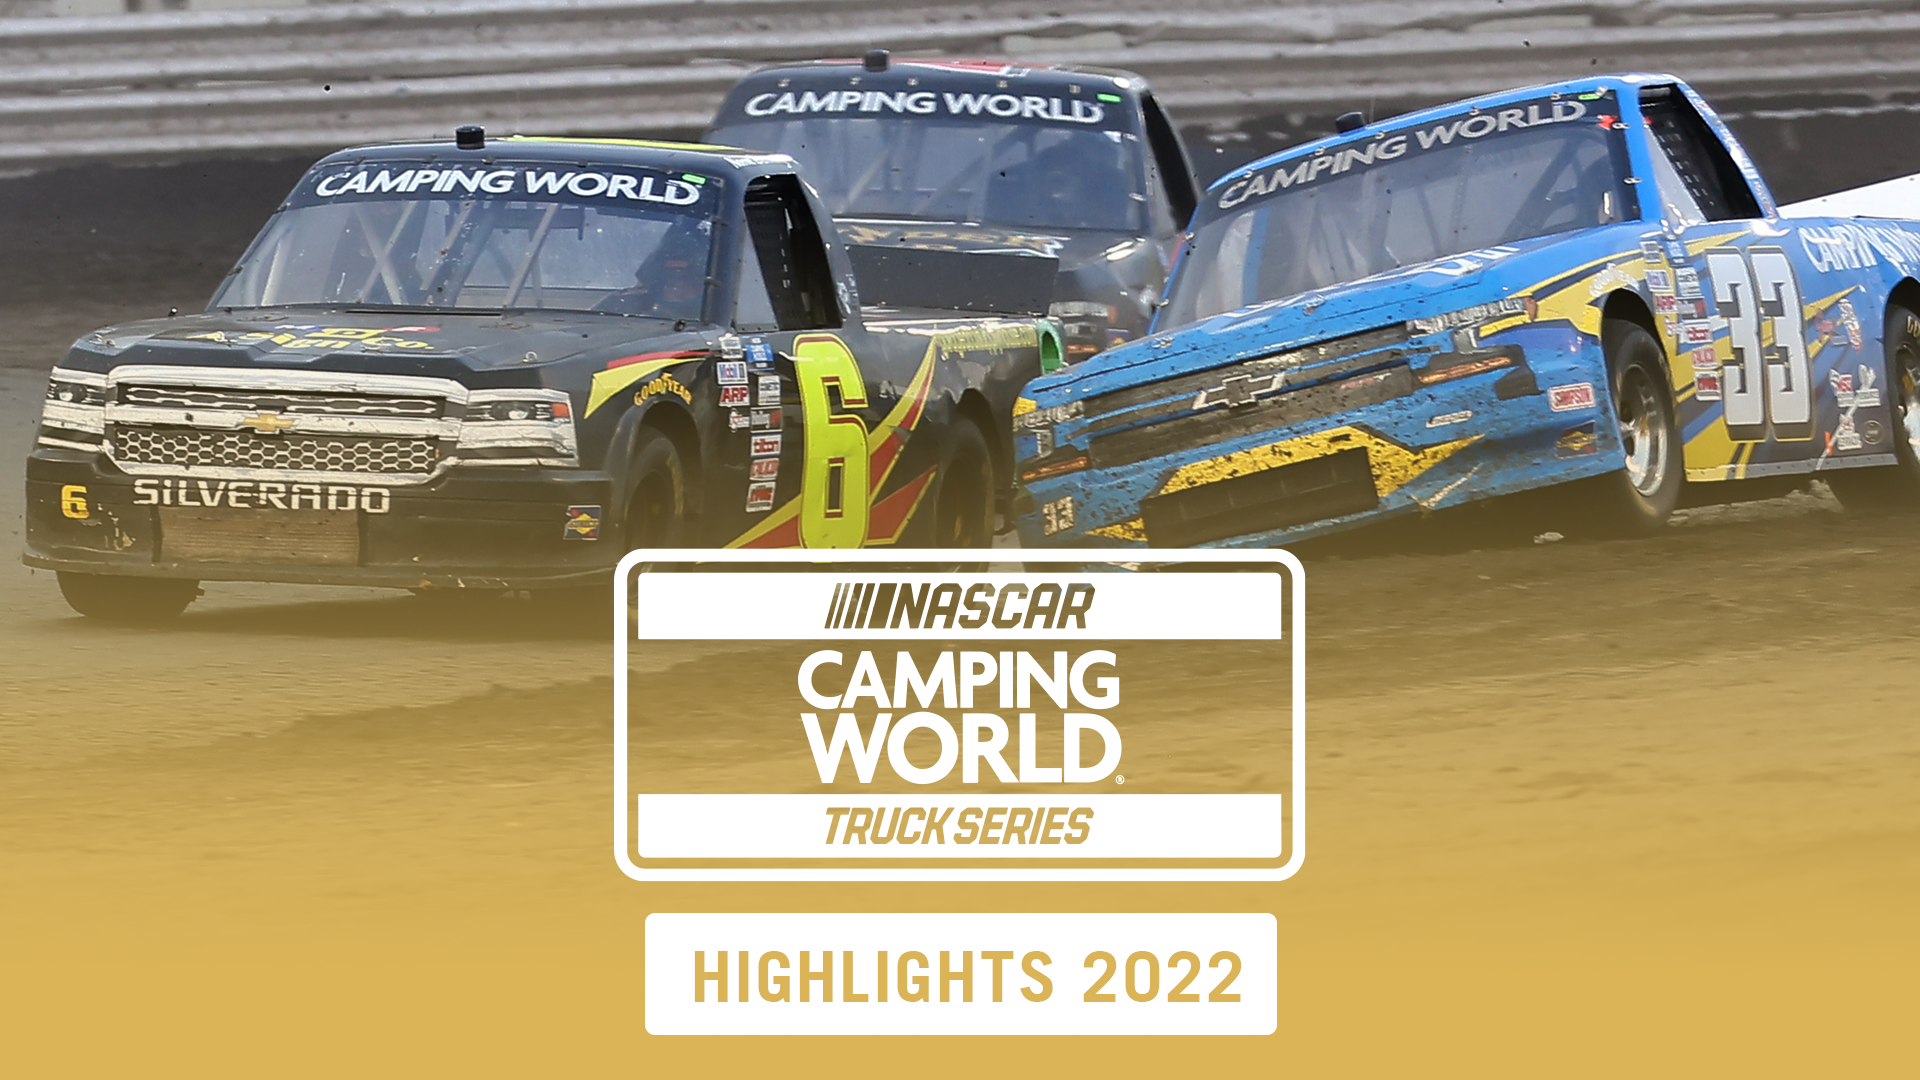 NASCAR CAMPING WORLD TRUCK SERIES - Highlights 2022